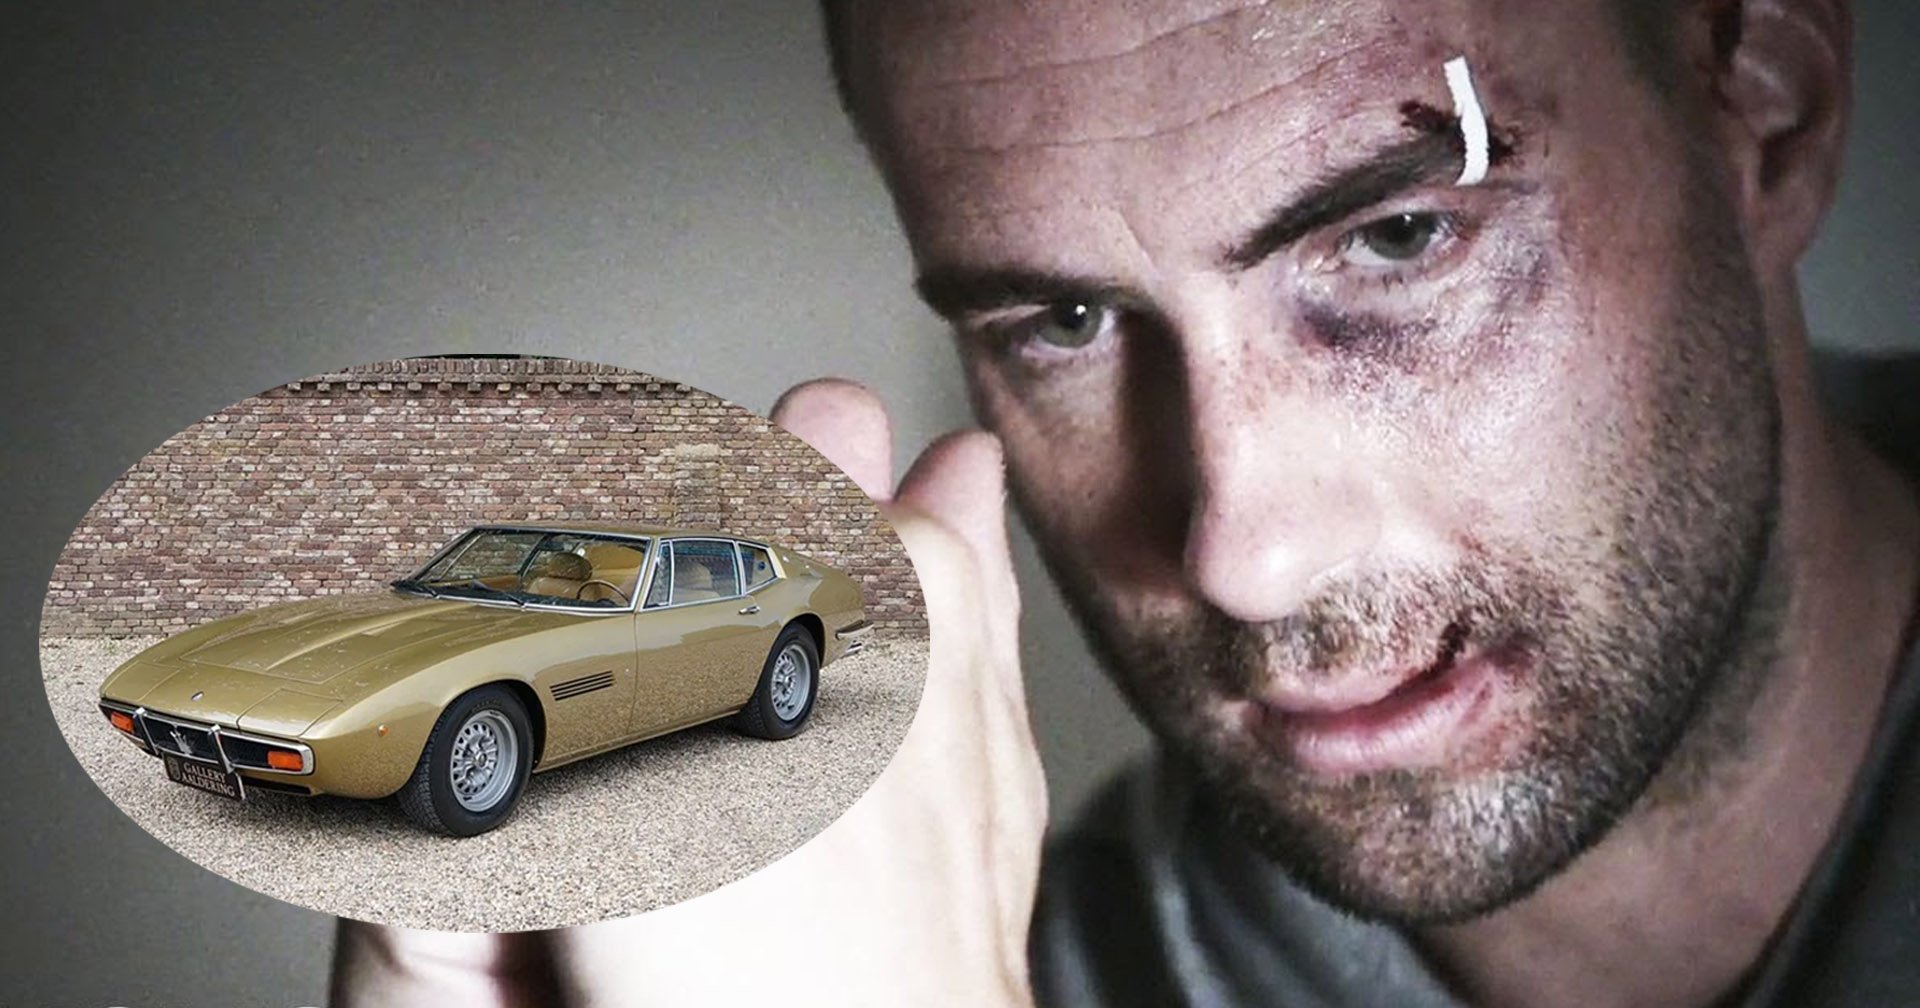 Adam Levine ฟ้องตัวแทนจำหน่ายรถ หลังโดนหลอกซื้อรถ ‘Maserati’ ปลอม